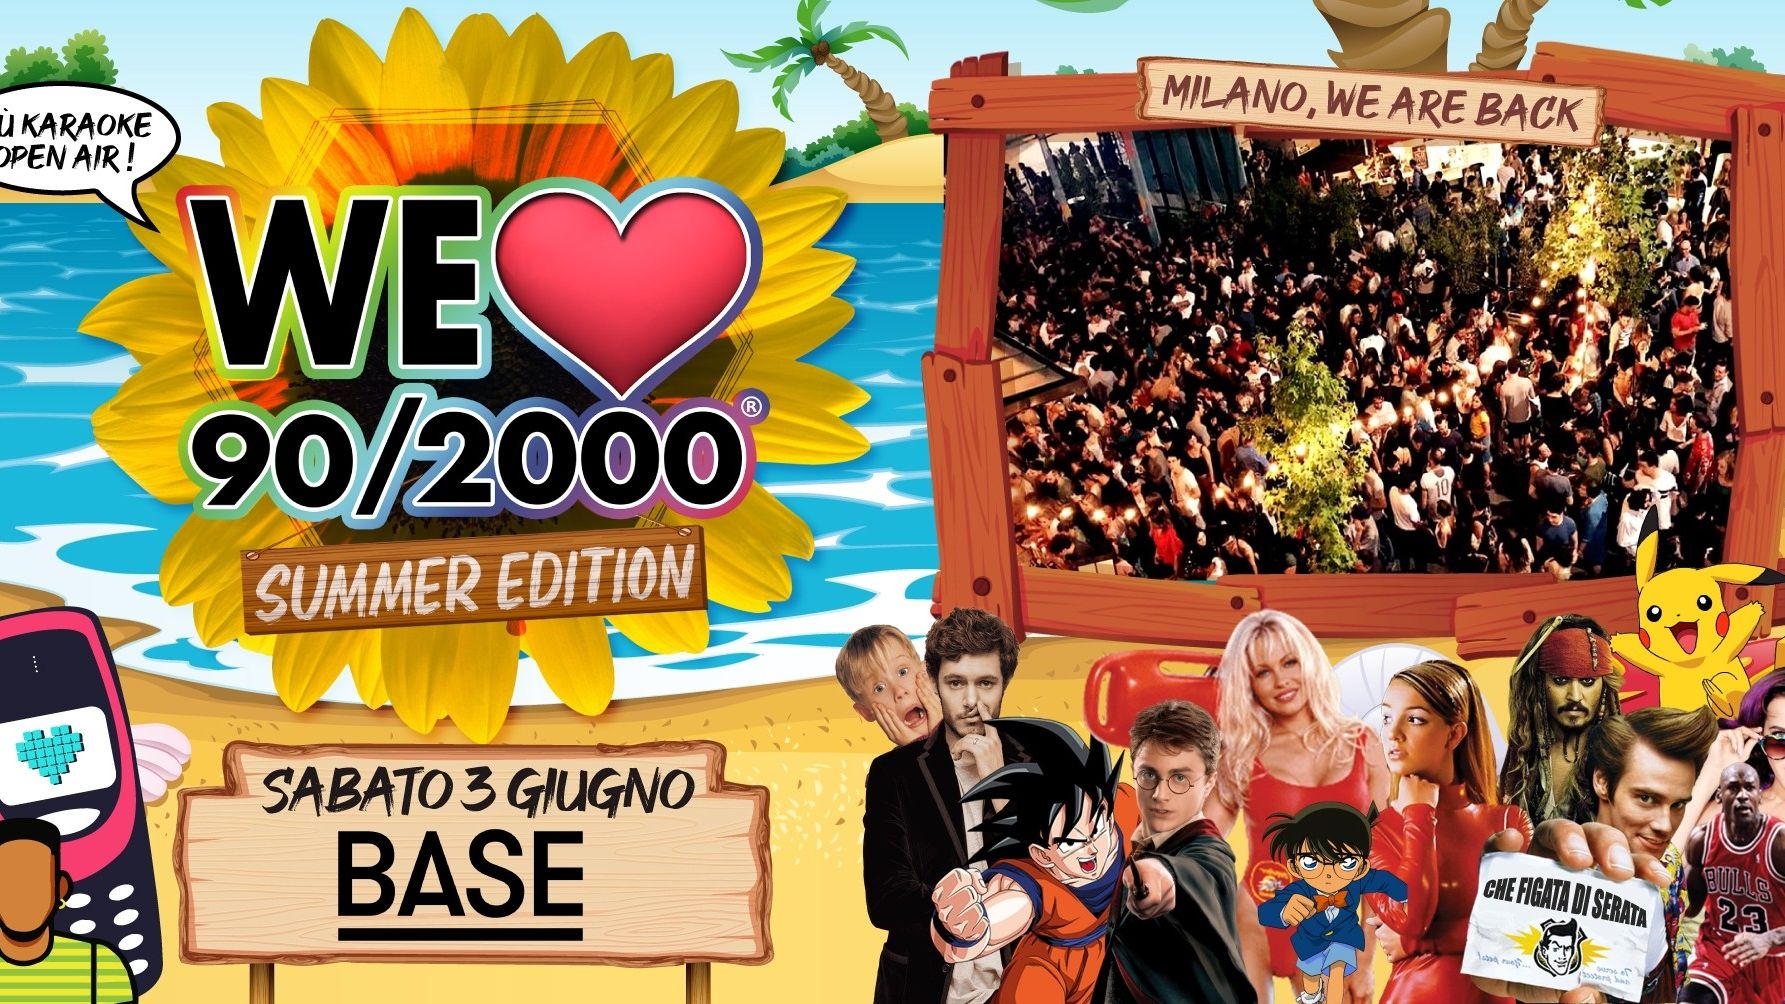 We Love 90/2000® Party + Karaoke open Air